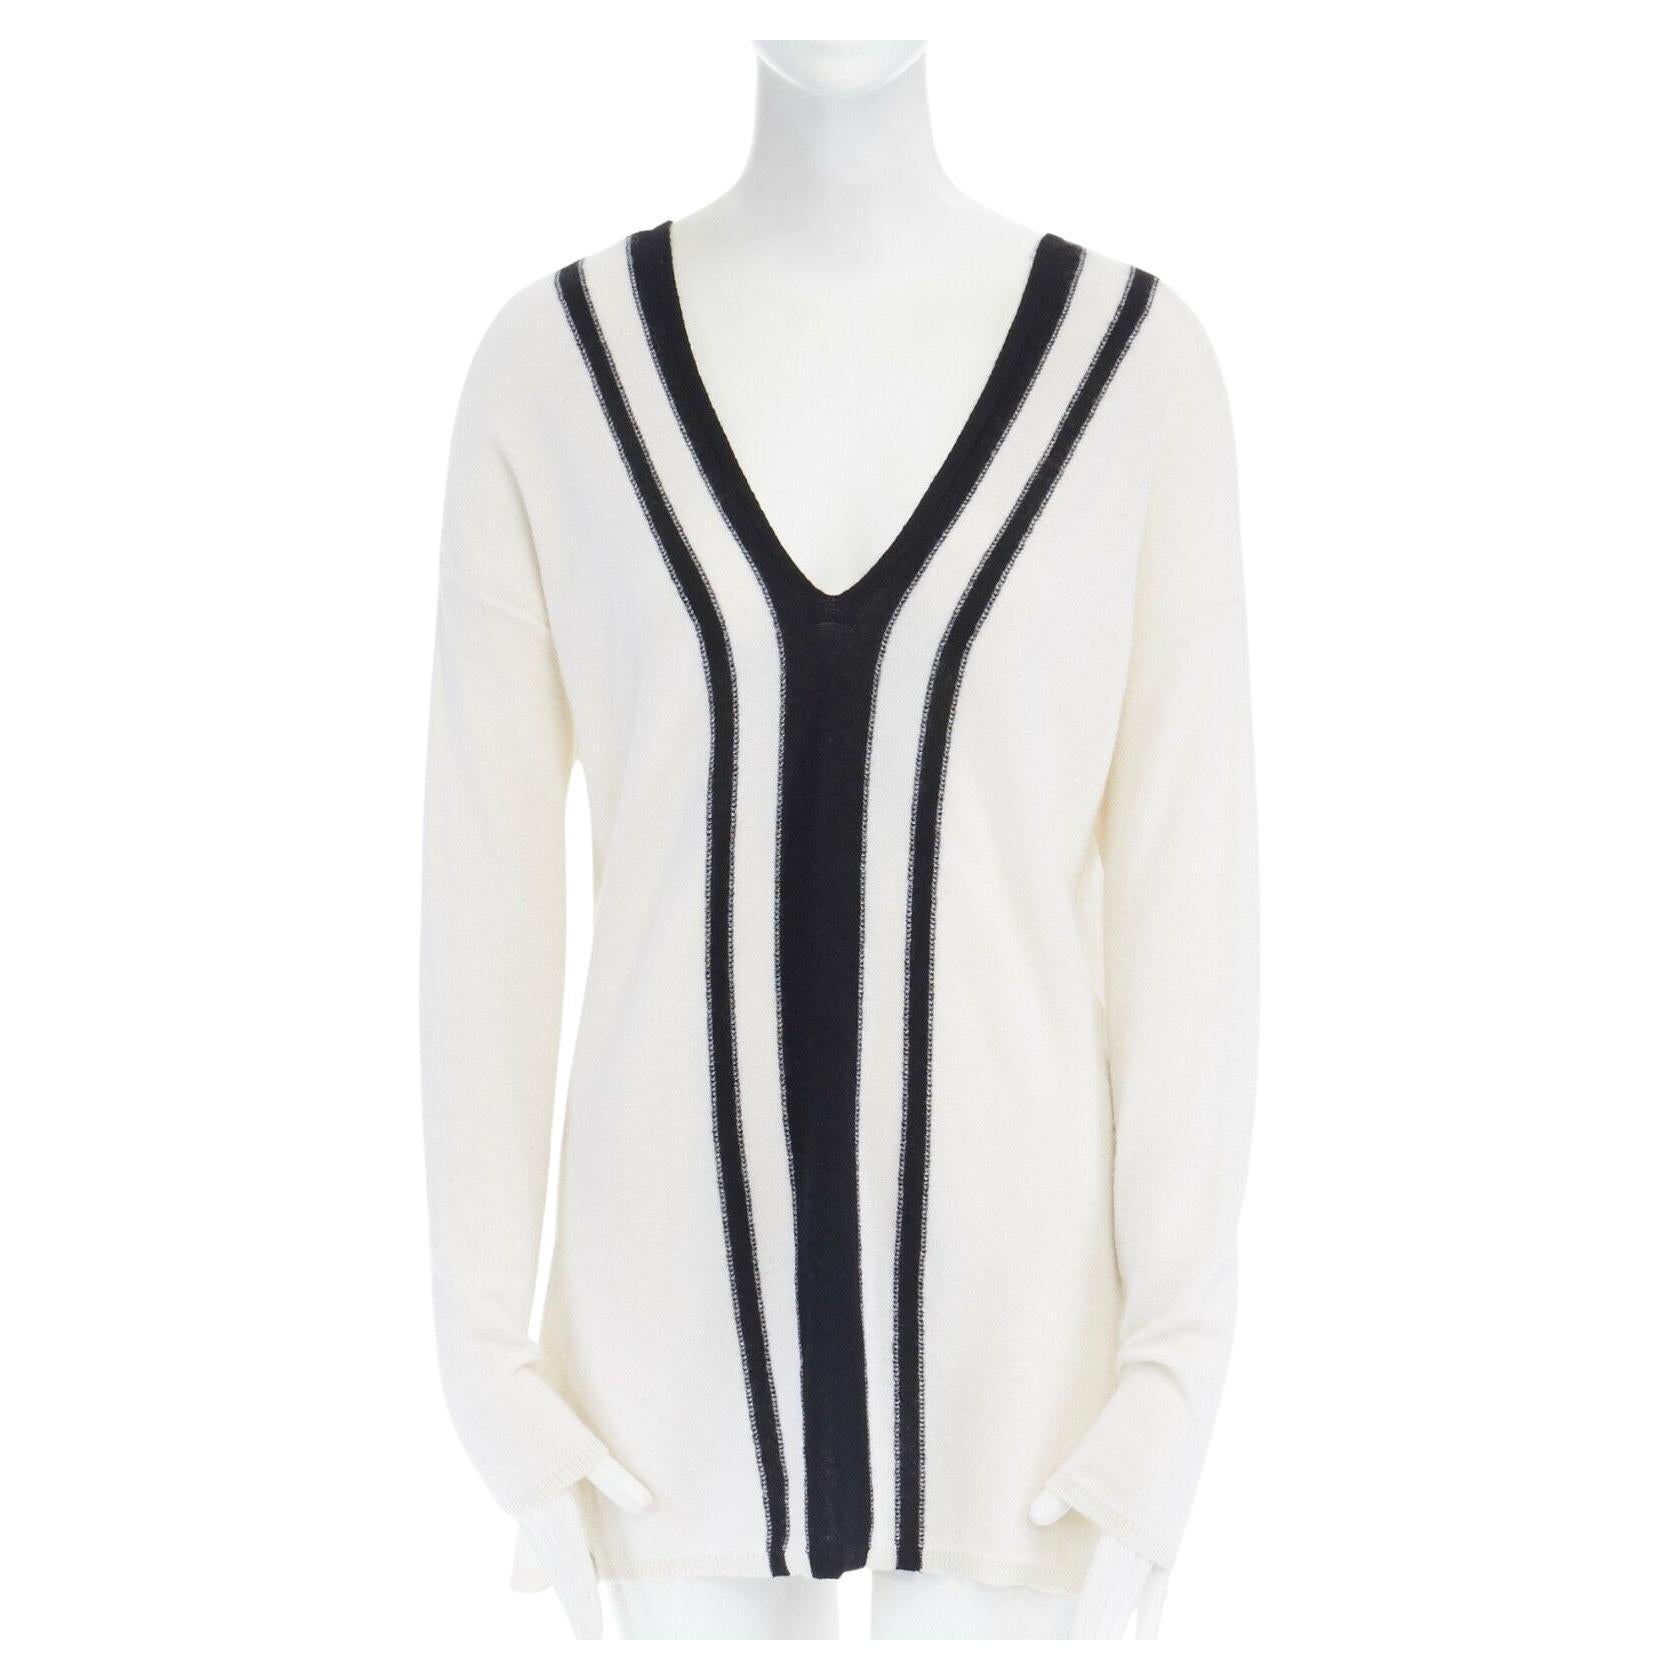 VINCE cashmere cream black striped V-neck varsity sweater top S